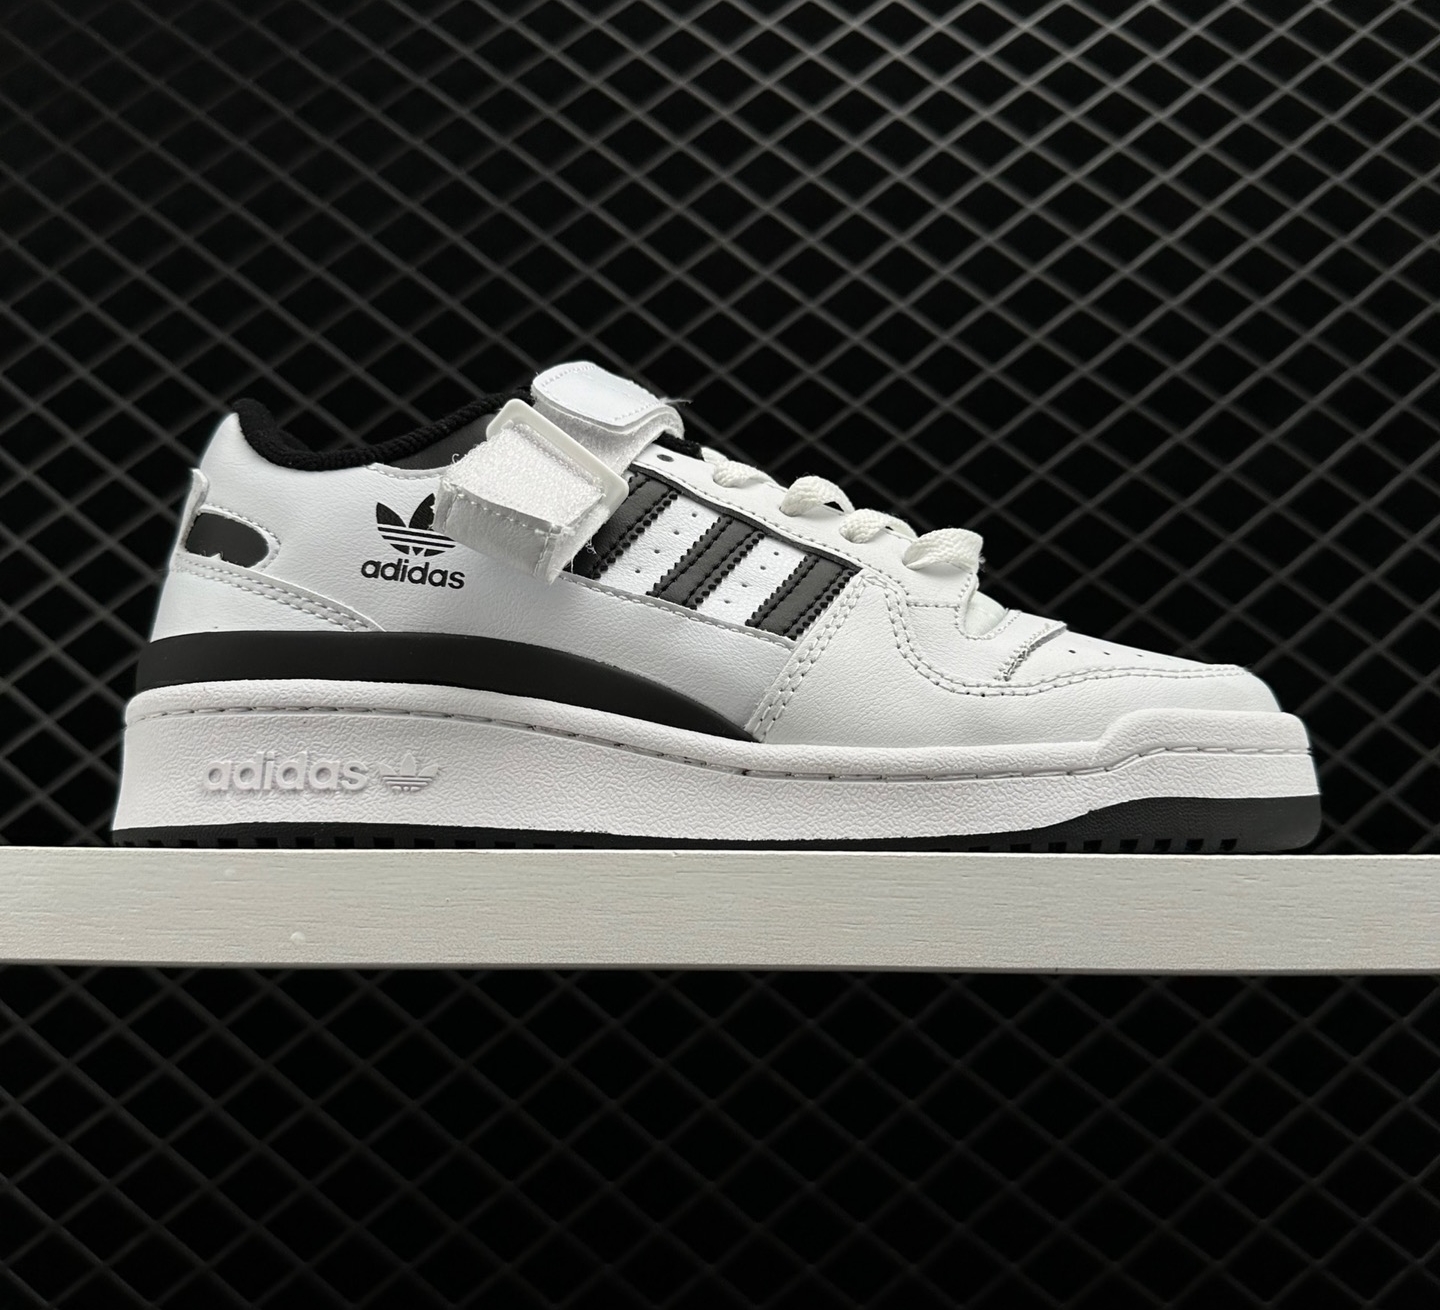 Adidas Forum Low 'White Black' FY7757 - Classic and Sleek Footwear